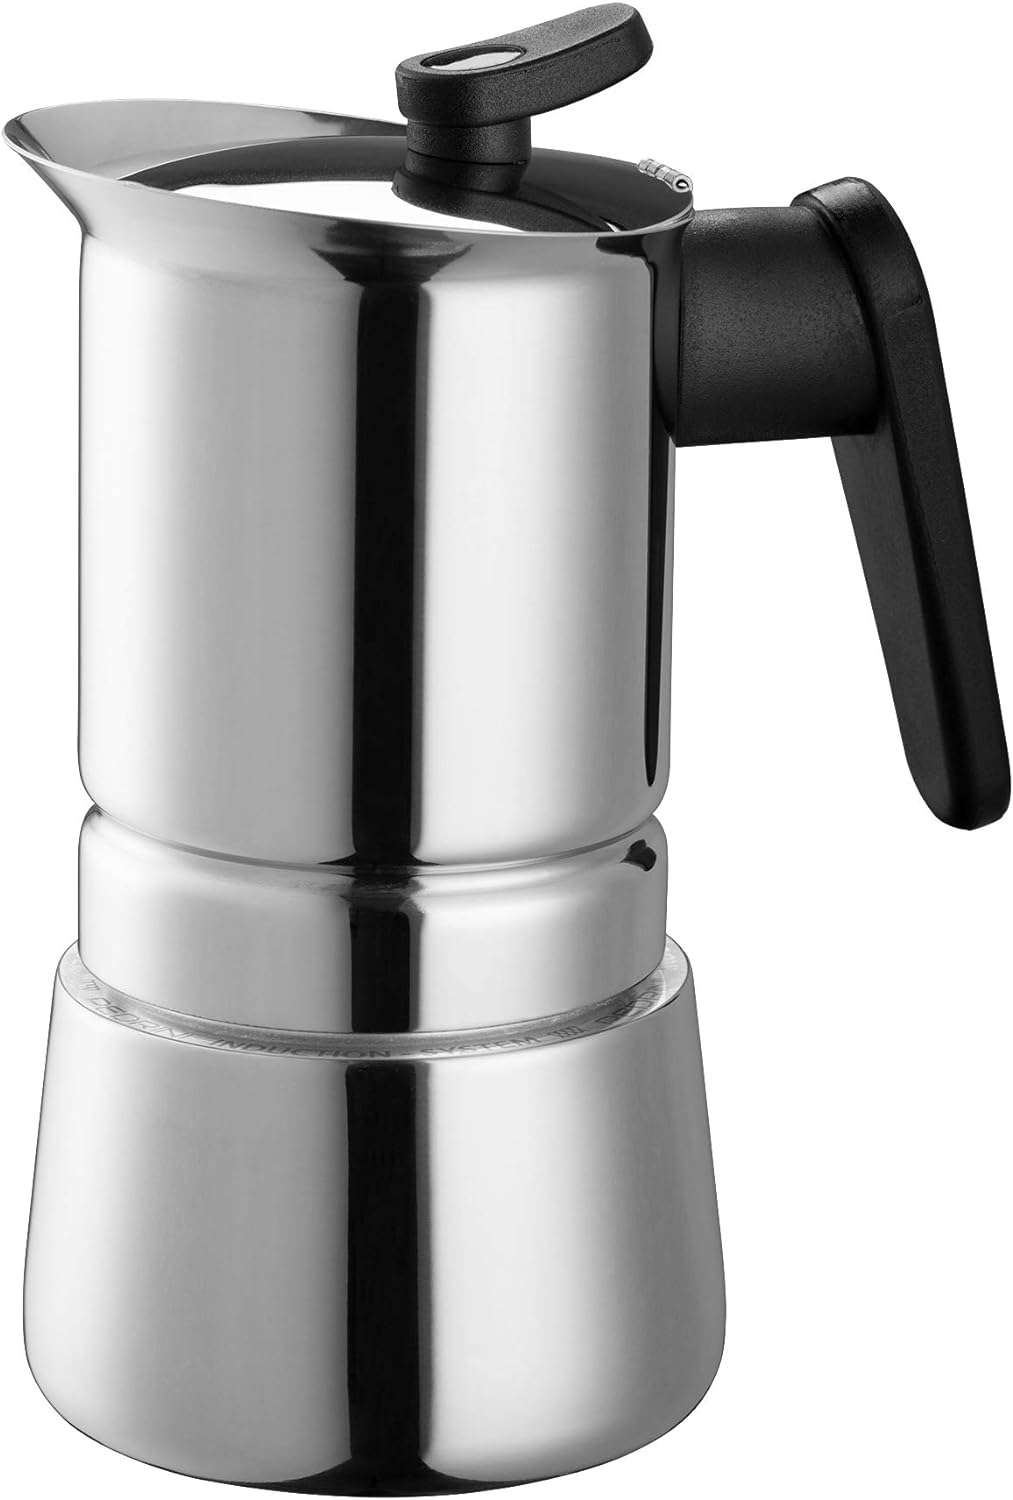 Pedrini Steelmoka, patented Moka espresso machine for hobs including induction, capacity 4 cups, silver color, steel coffee machine, 14 x 9.5 x 18 cm